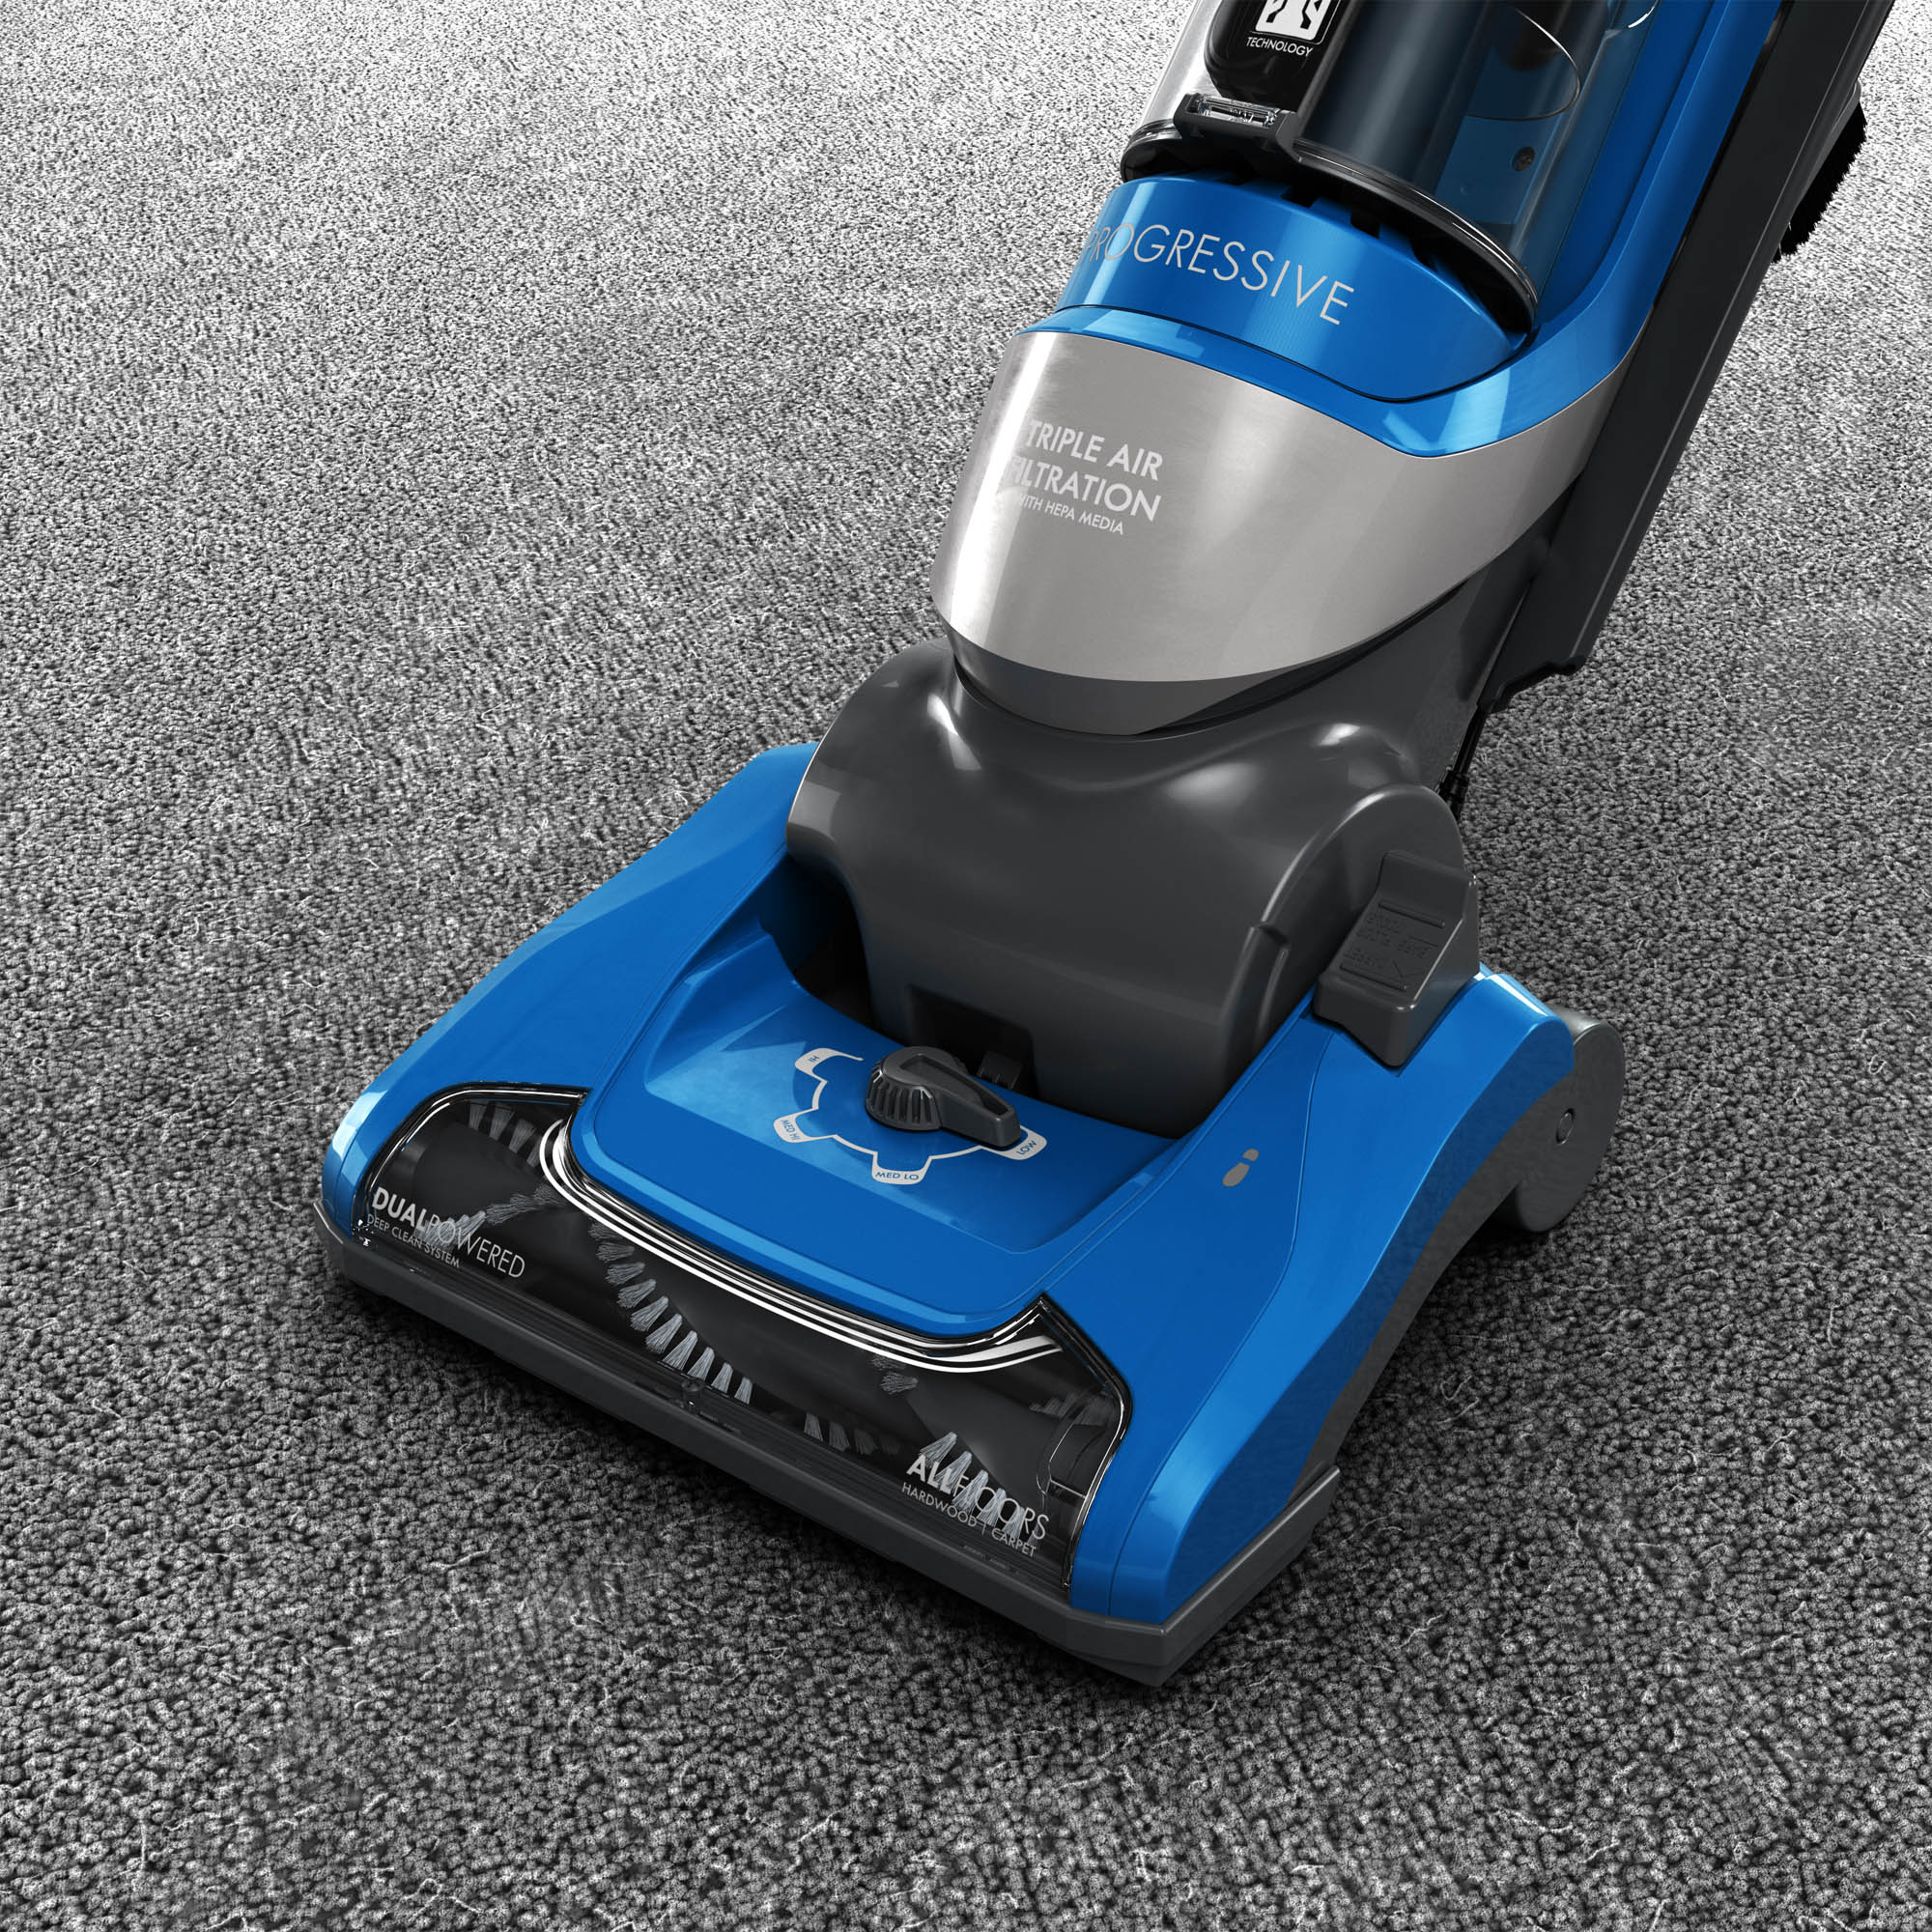 Kenmore DU3002 Progressive Pet Friendly Bagless Floor & Carpet Upright Vacuum eBay